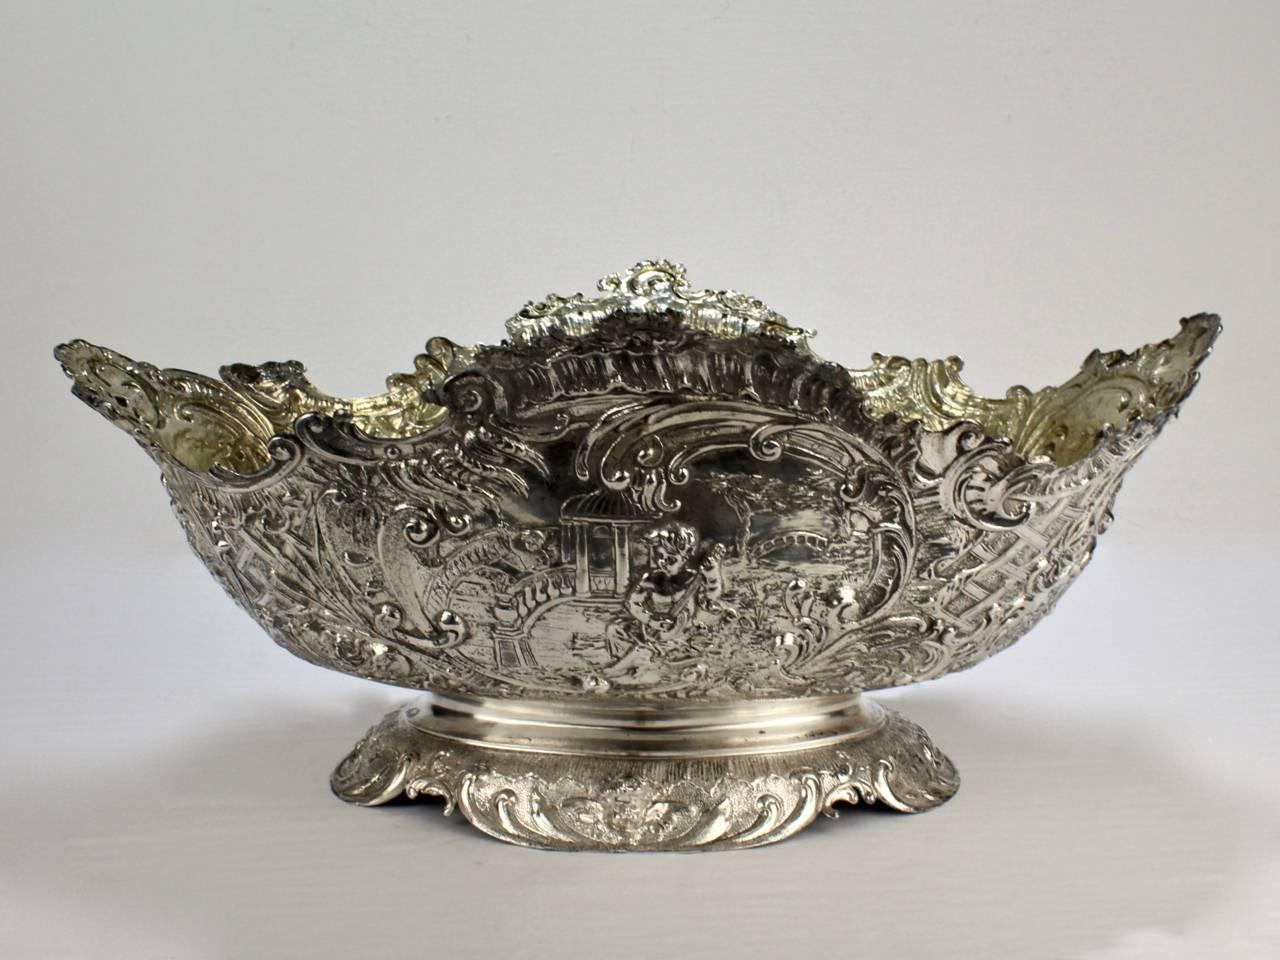 19th Century German Rococo Revival Repoussé 800 Silver Centerpiece or Bowl For Sale 5